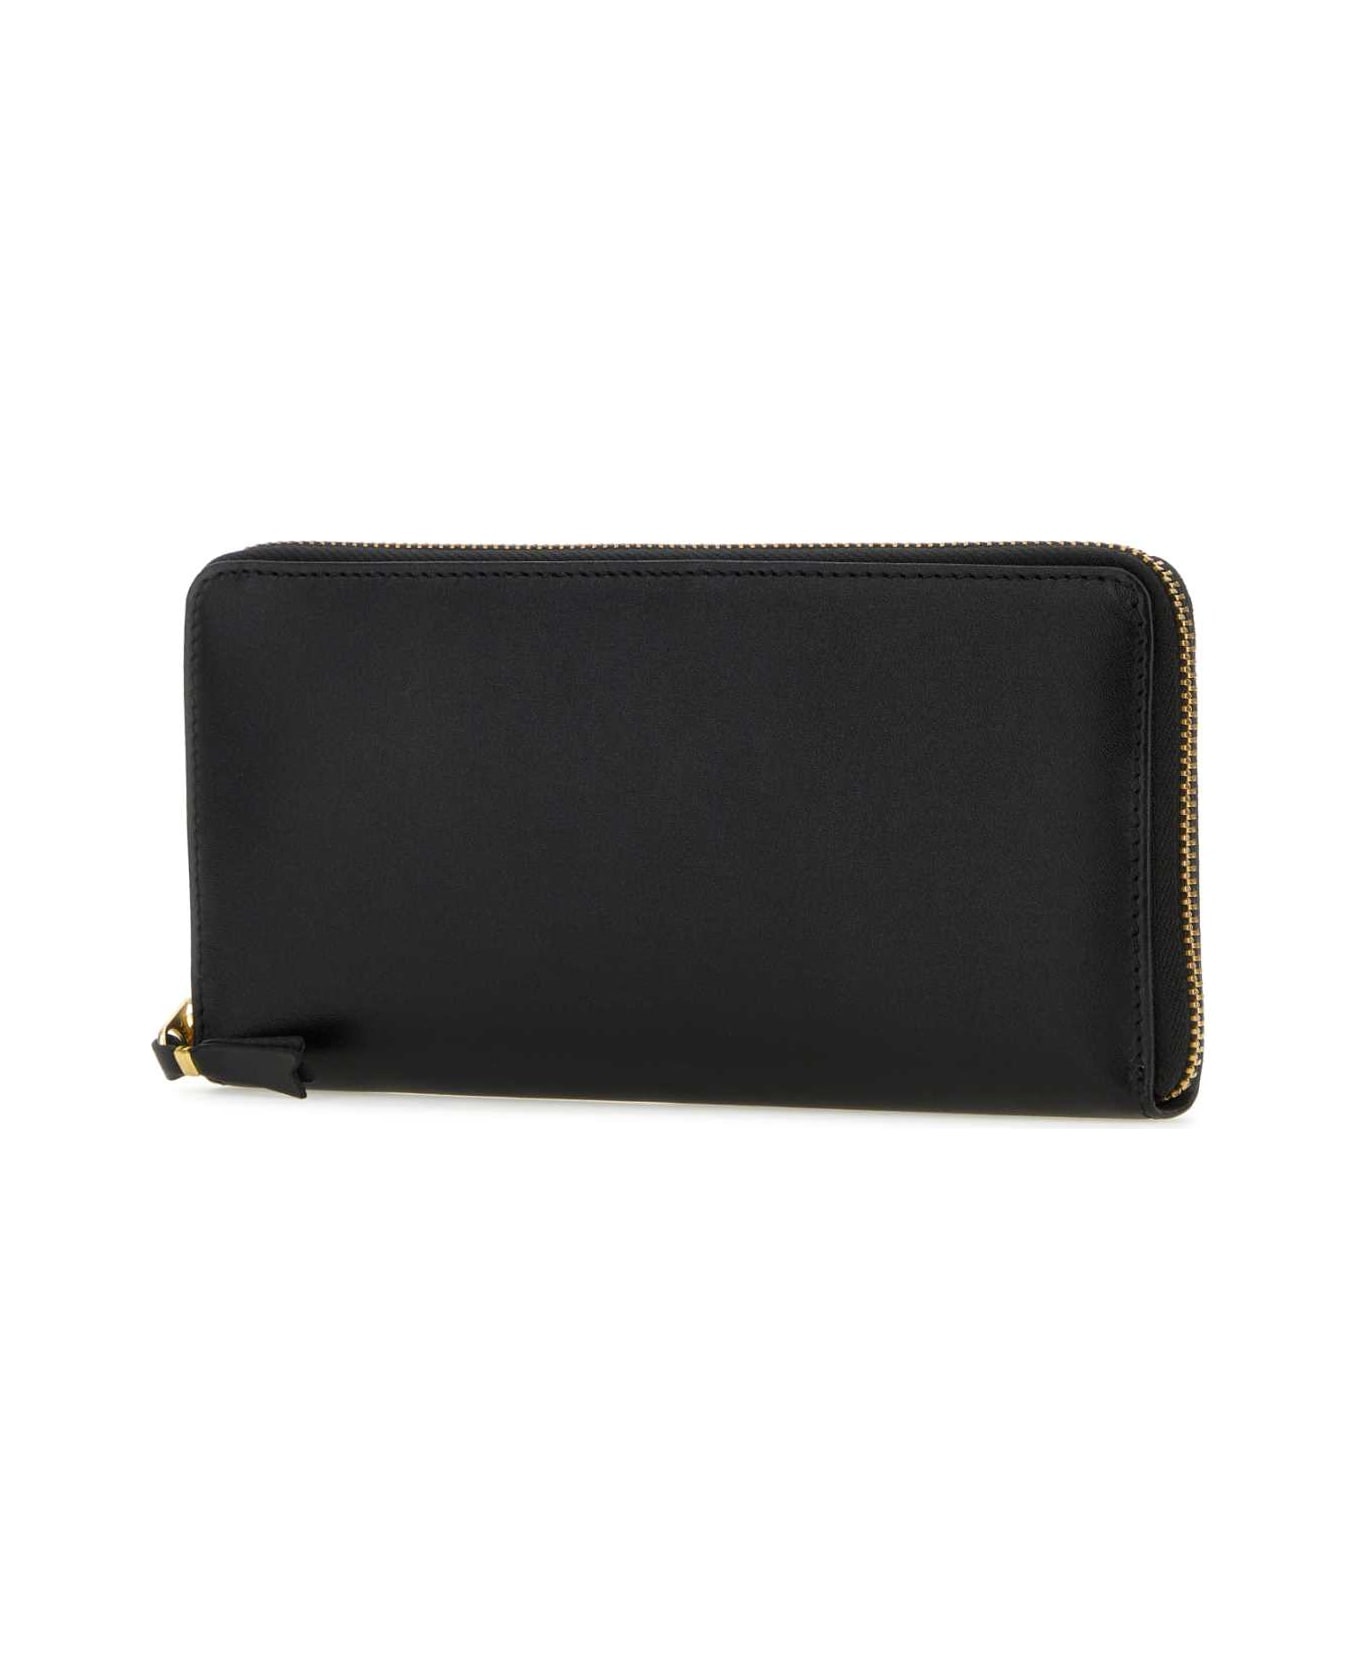 Black Leather Wallet - 2